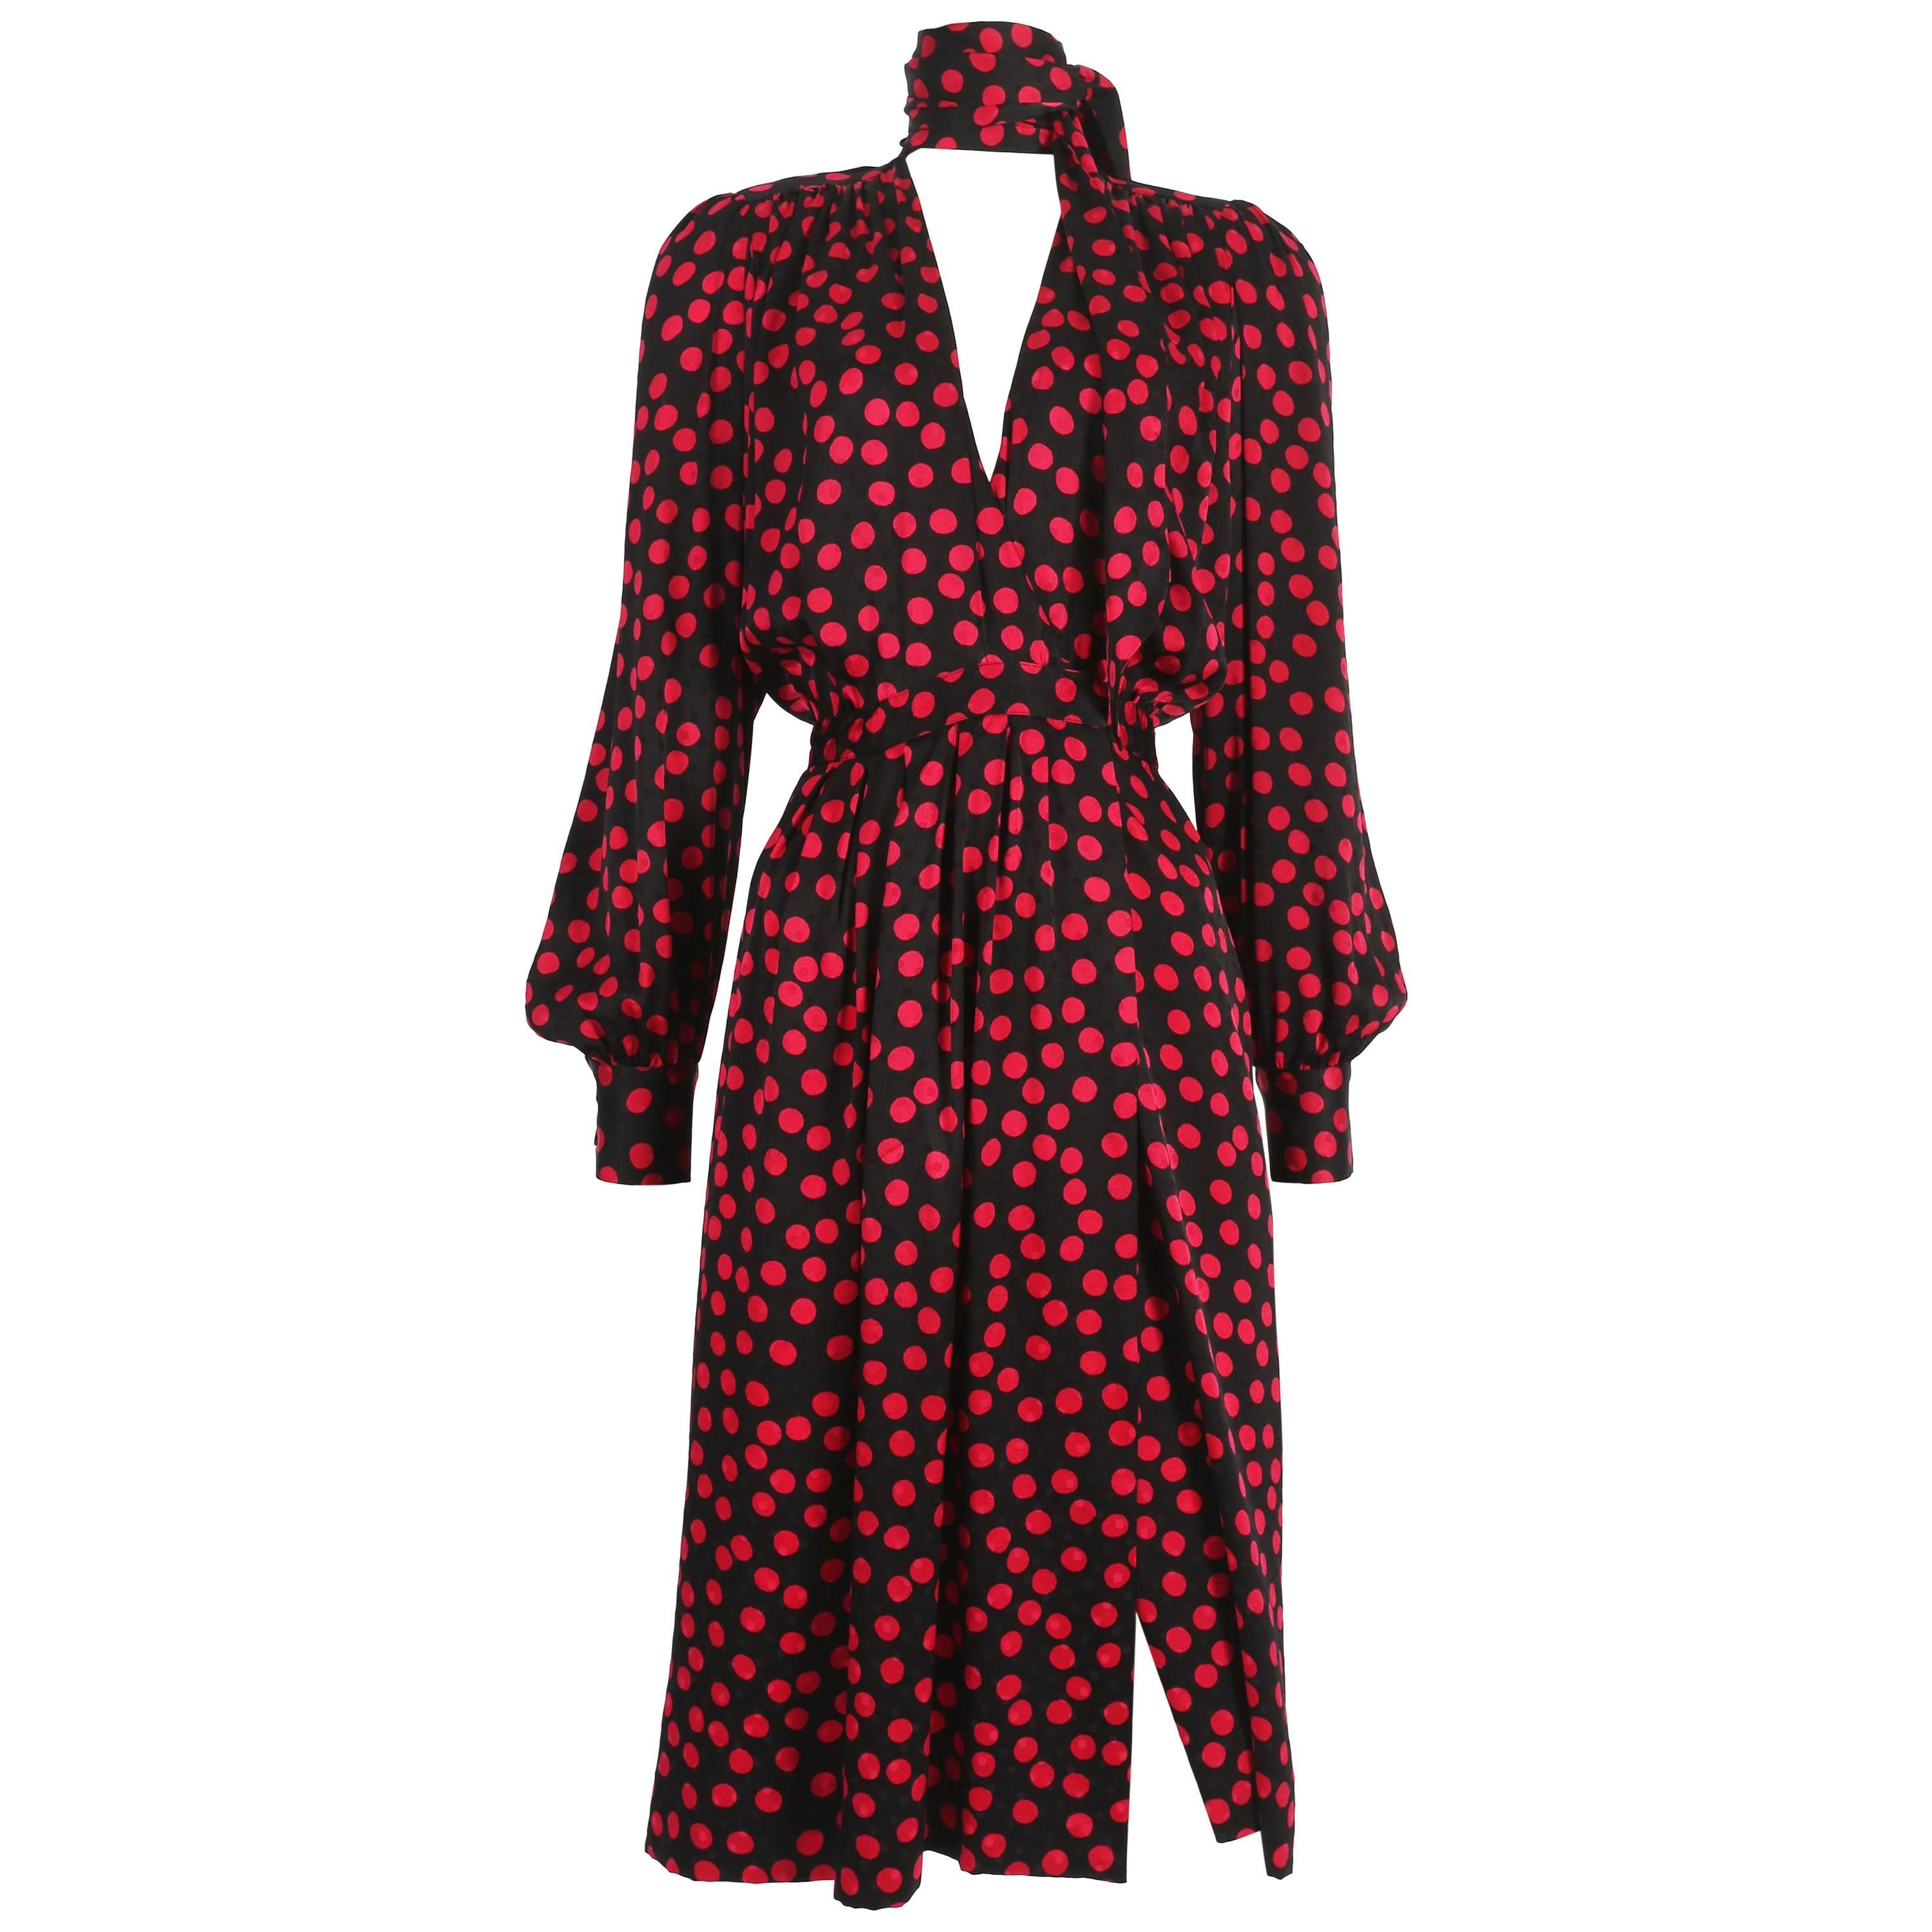 Yves Saint Laurent silk polka dot evening wrap dress, circa 1970s